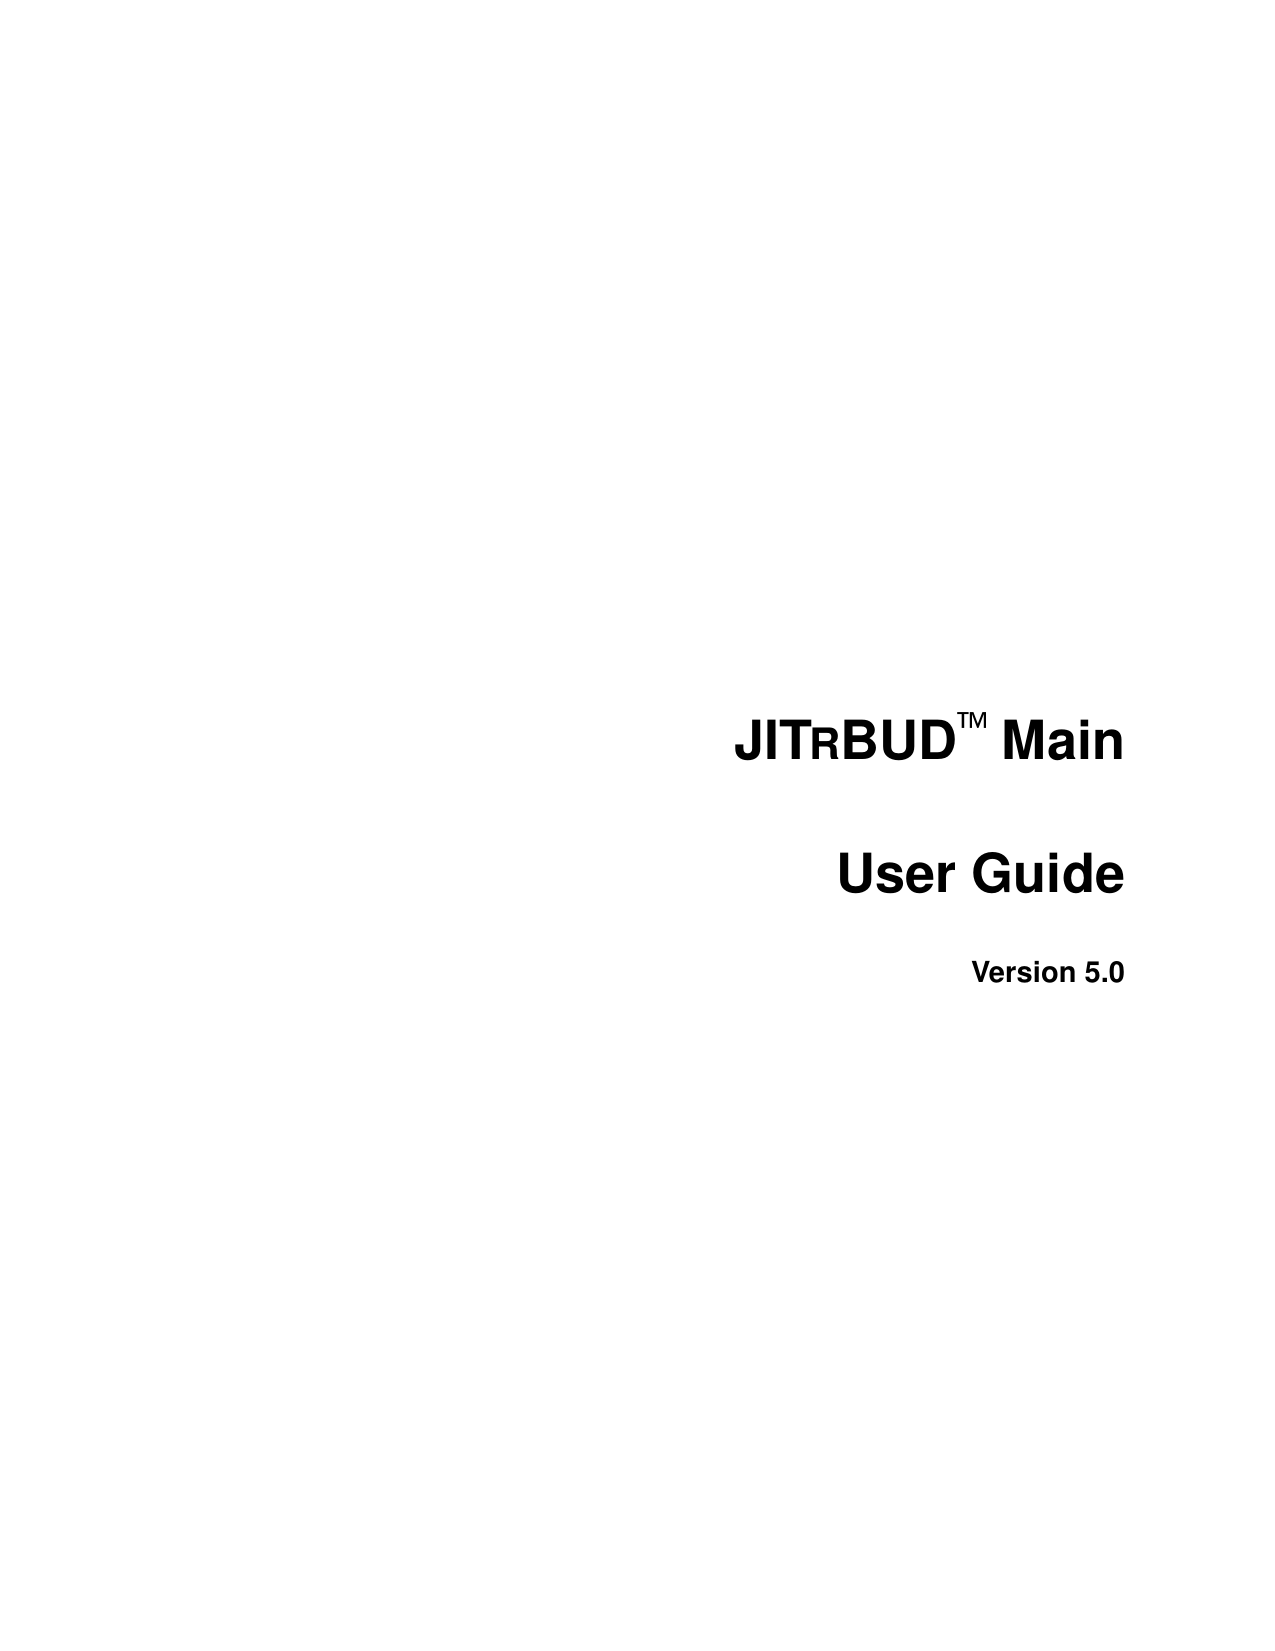 JITRBUD MainUser GuideVersion 5.0